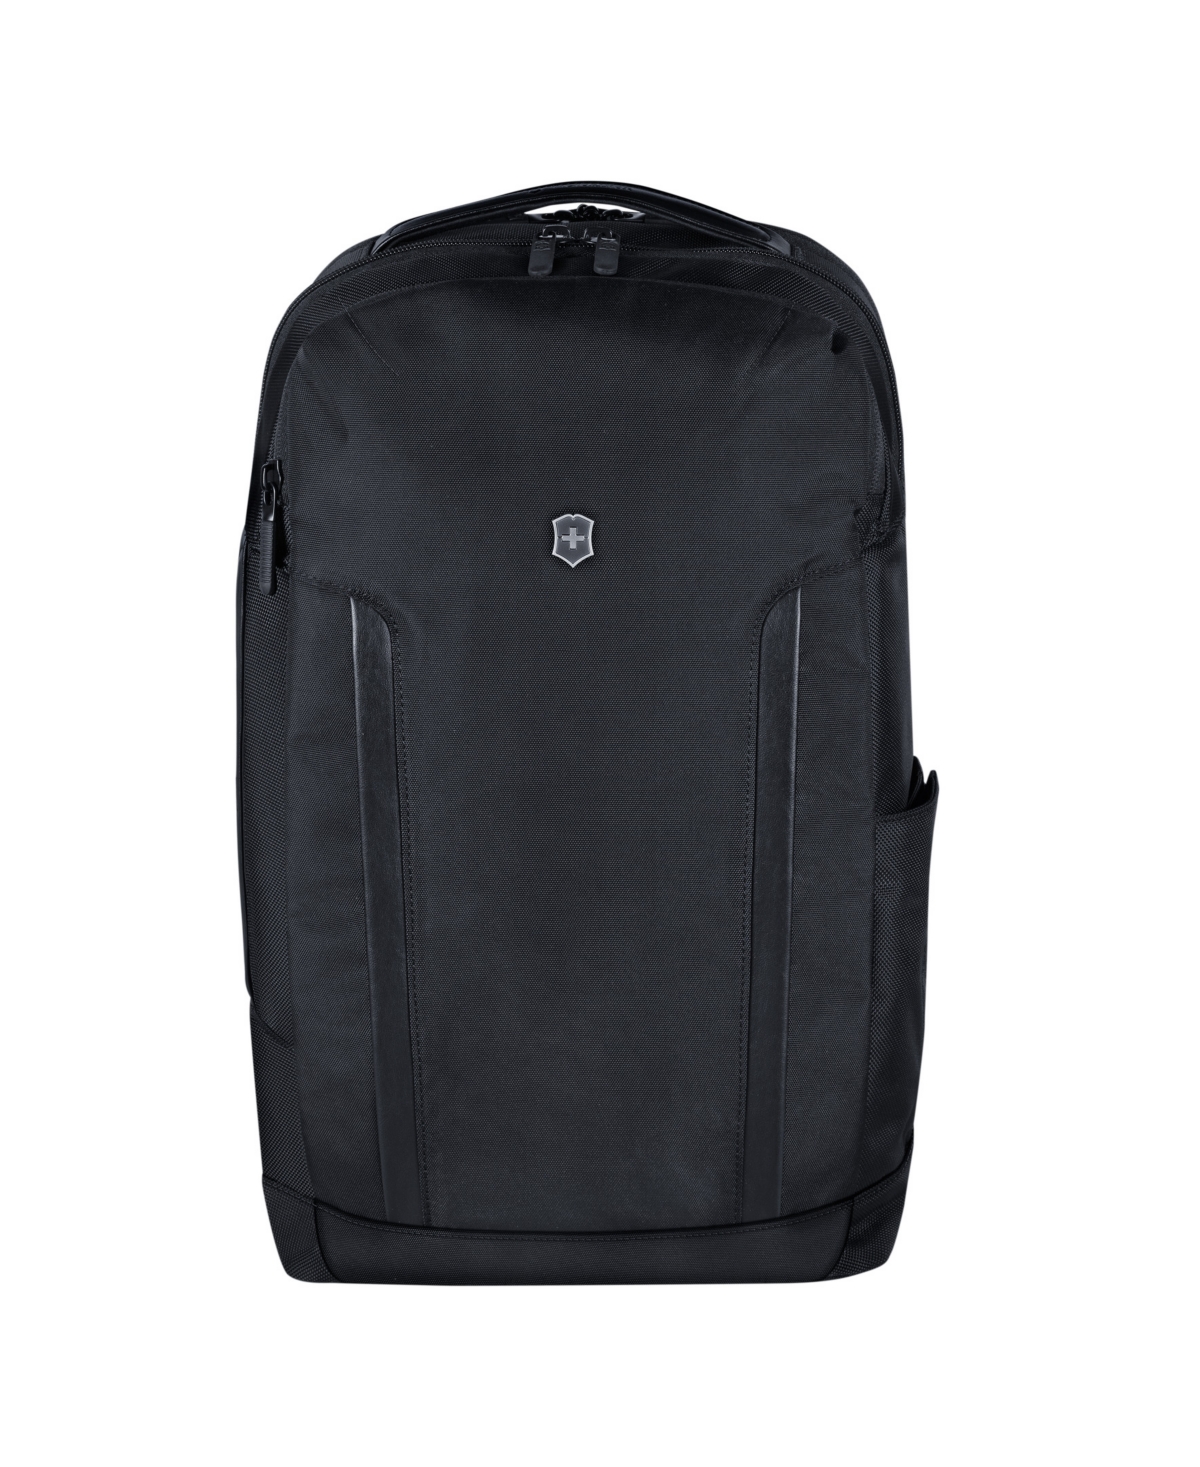 Altmont Professional Deluxe Travel Laptop Backpack - Black